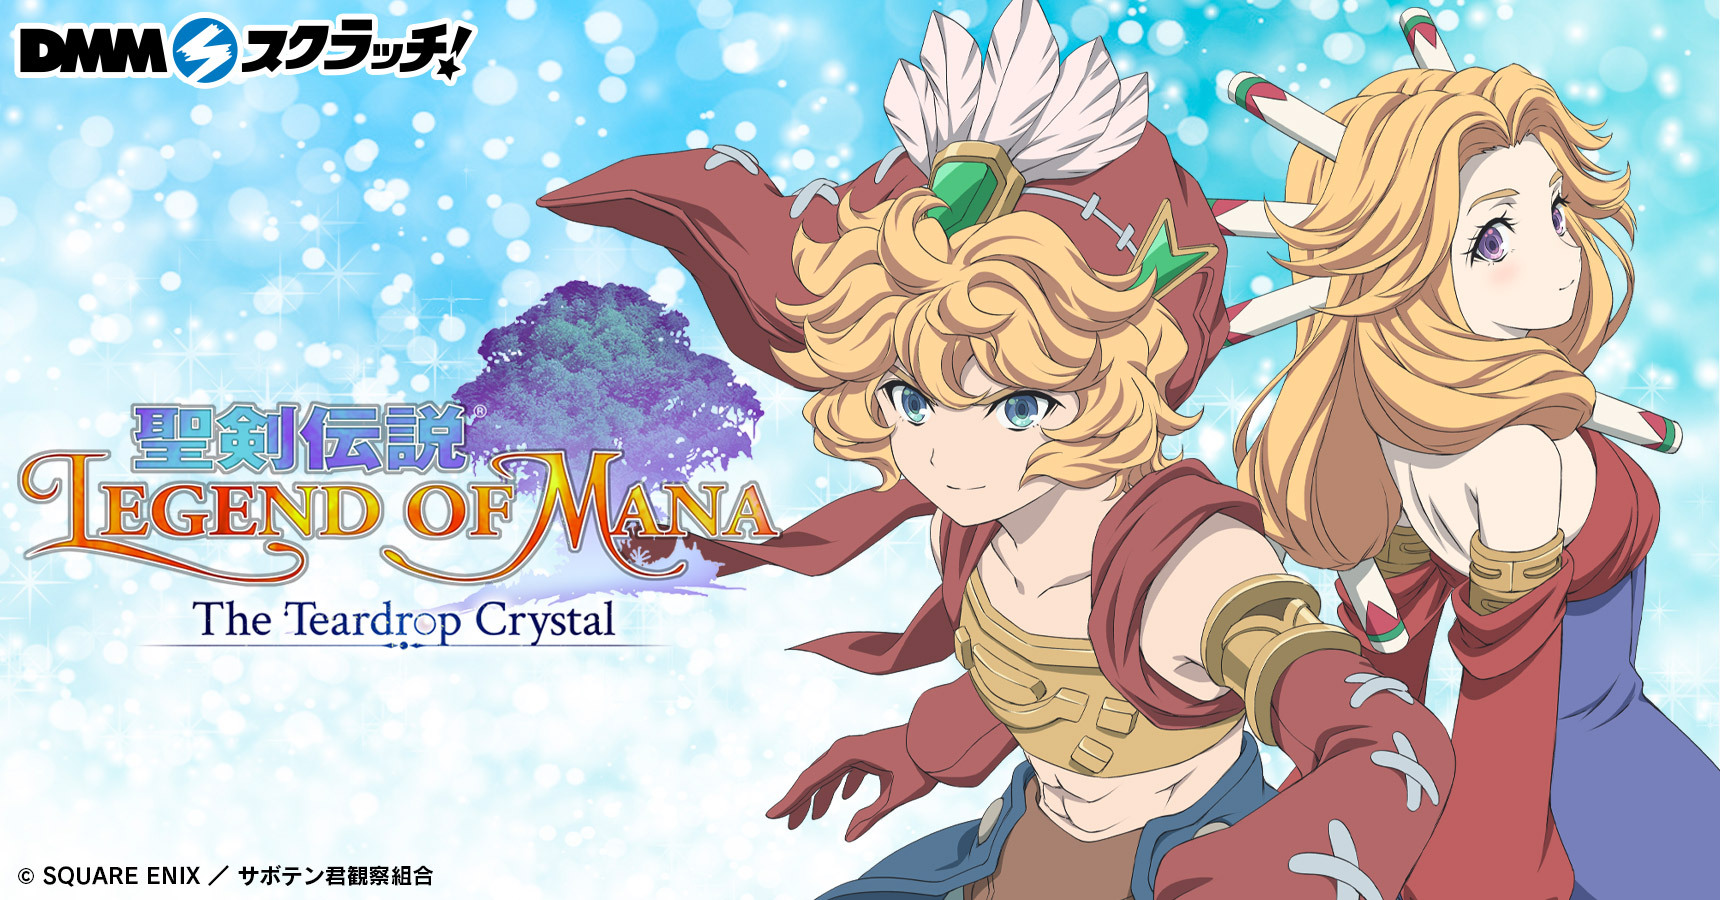 TVアニメ「聖剣伝説 Legend of Mana -The Teardrop Crystal-」 スクラッチ第二弾 - DMMスクラッチ